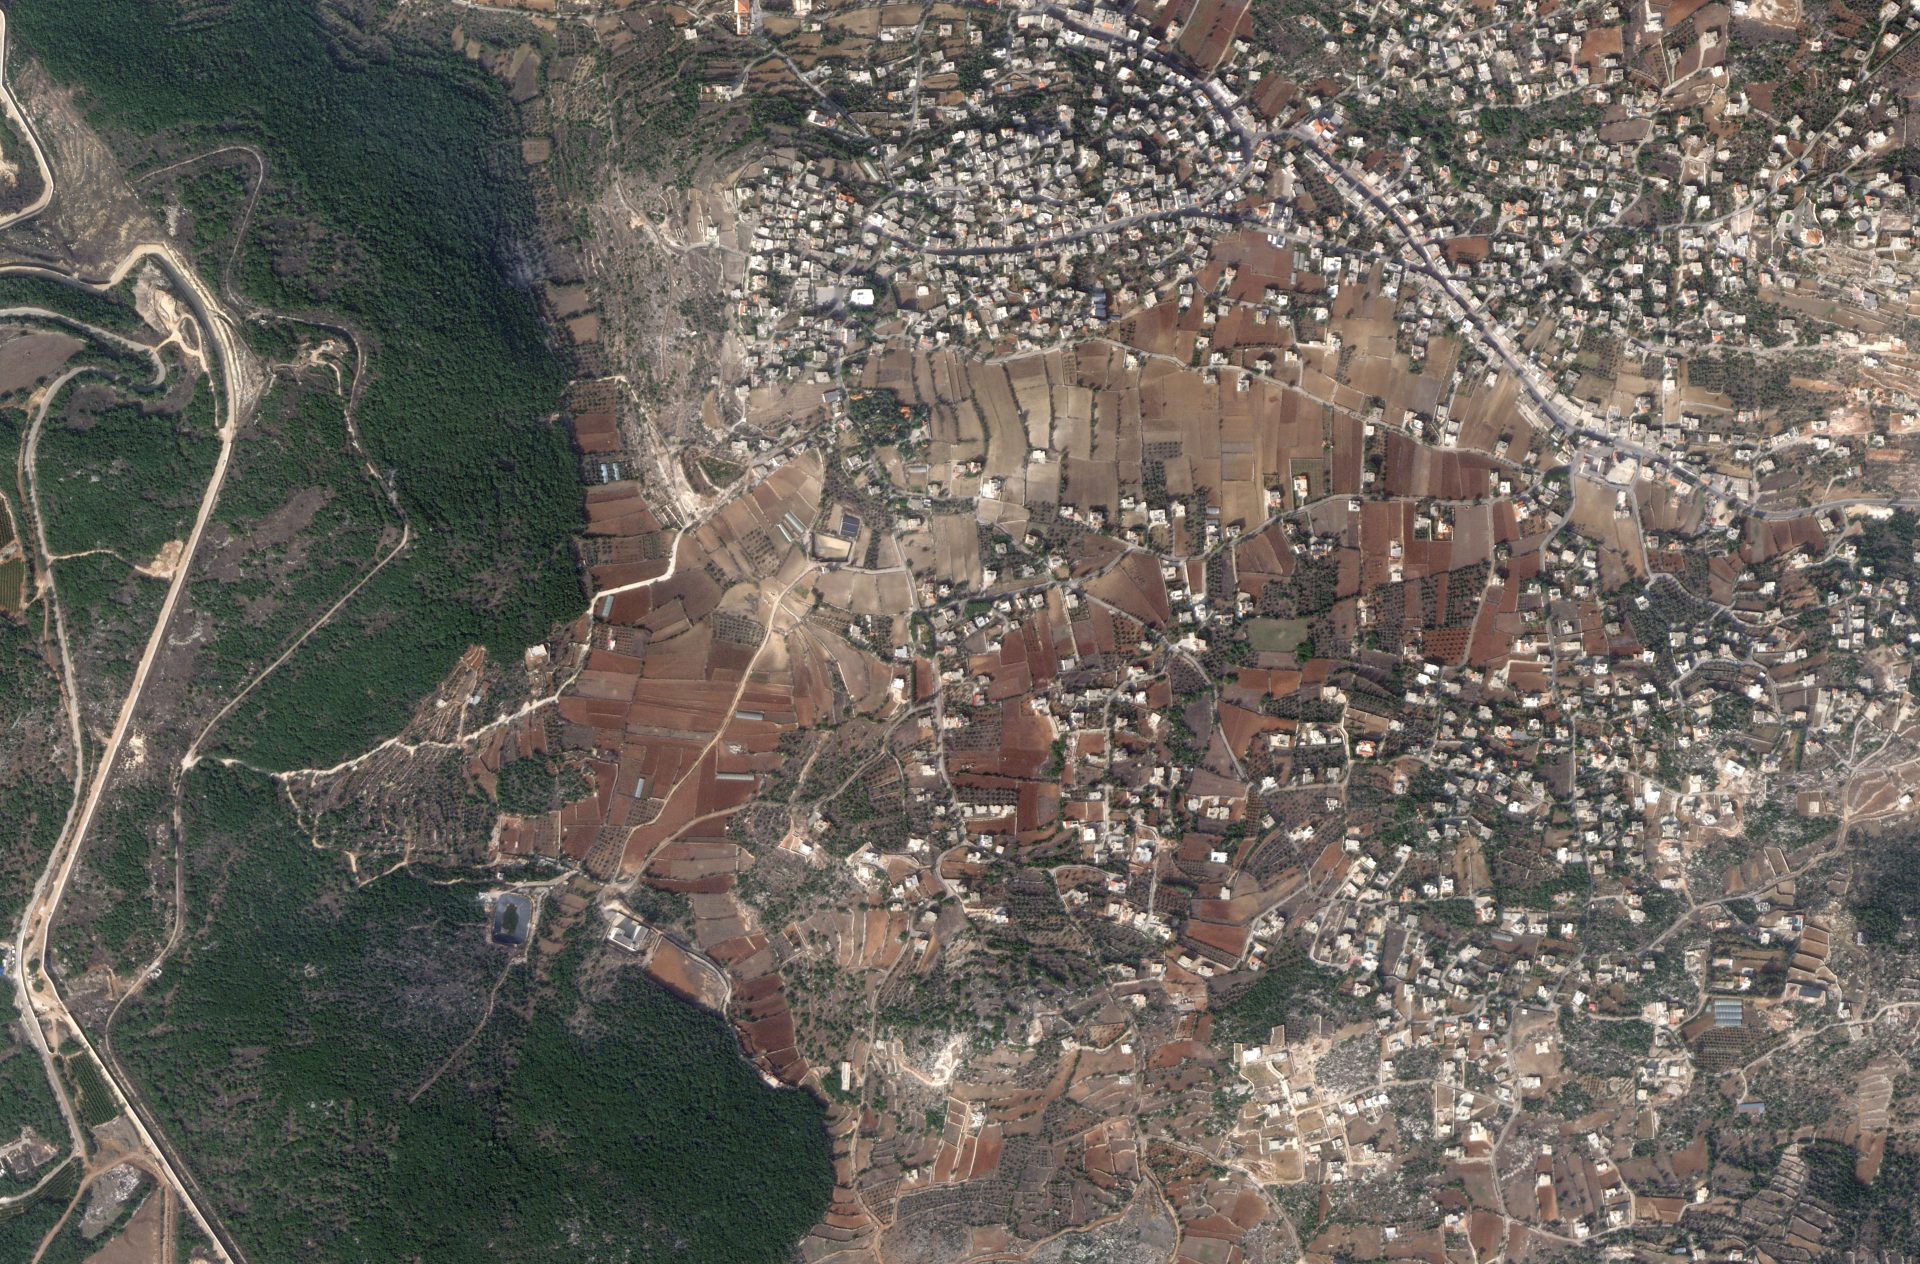 Israël vise-t-elle une "zone morte" au Liban selon Financial Times